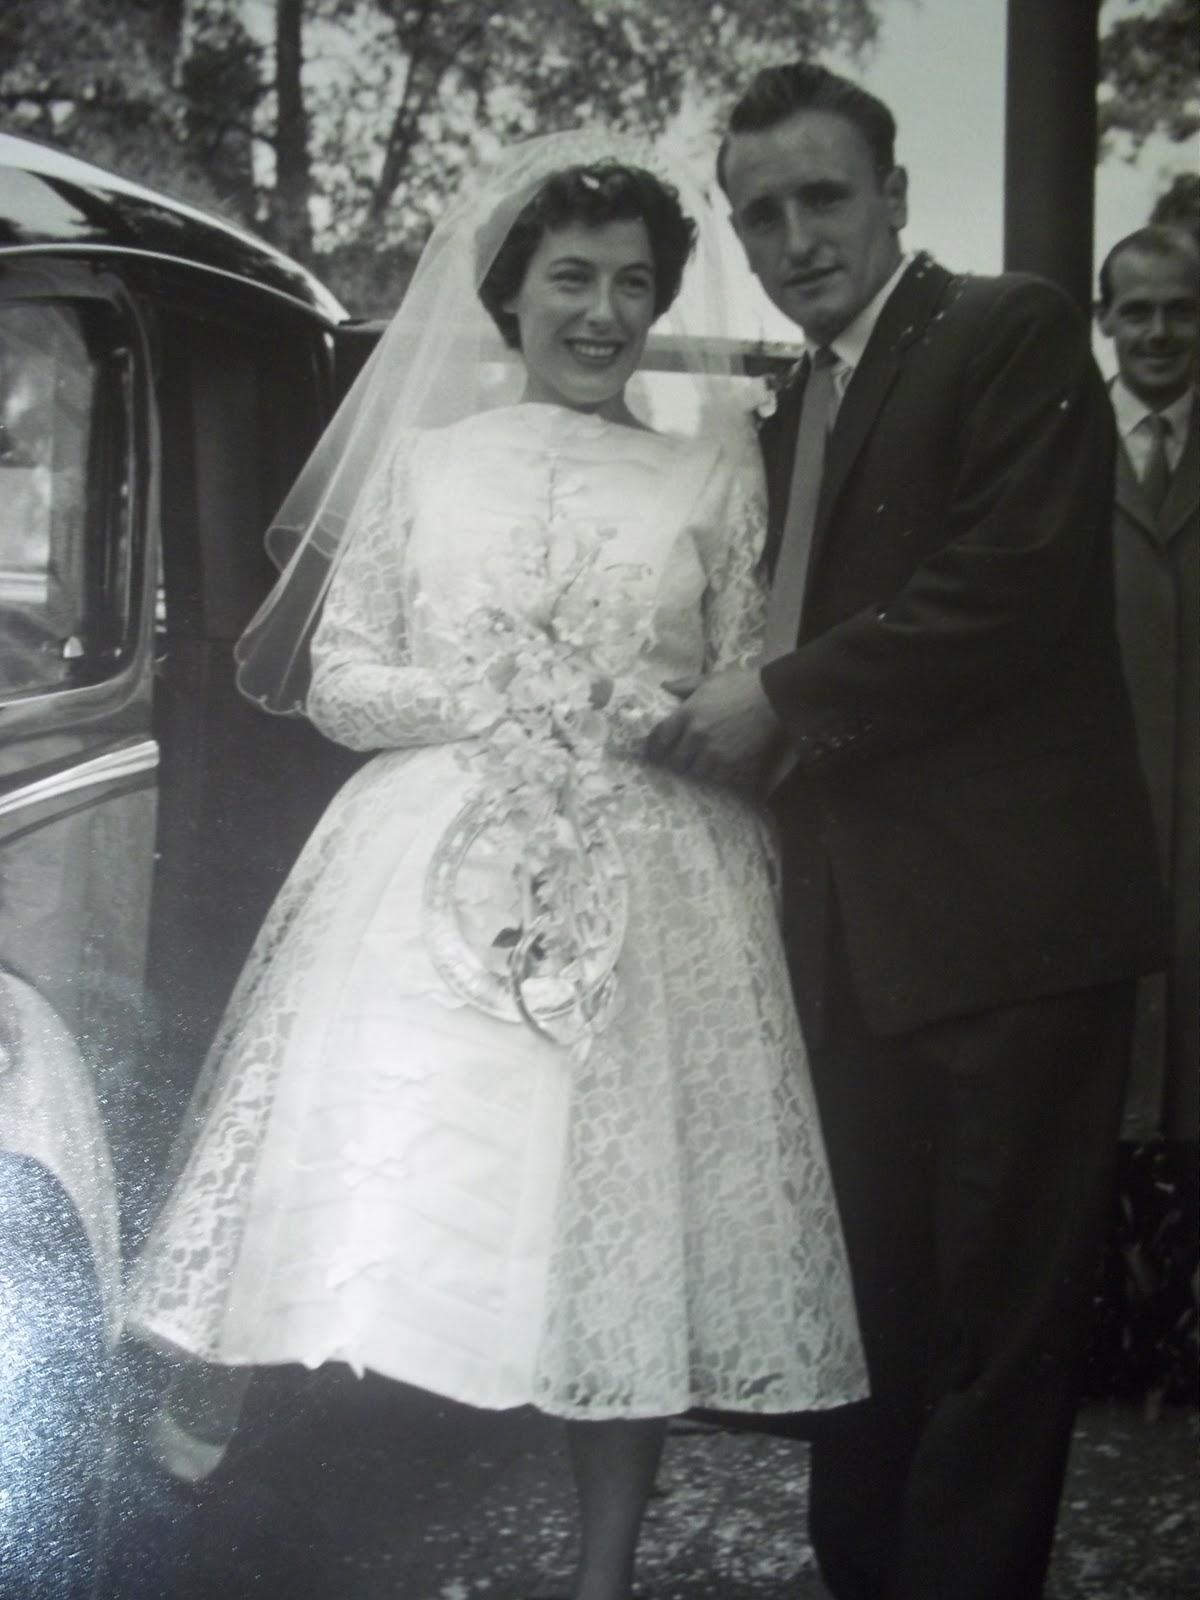 Nana in her wedding dress